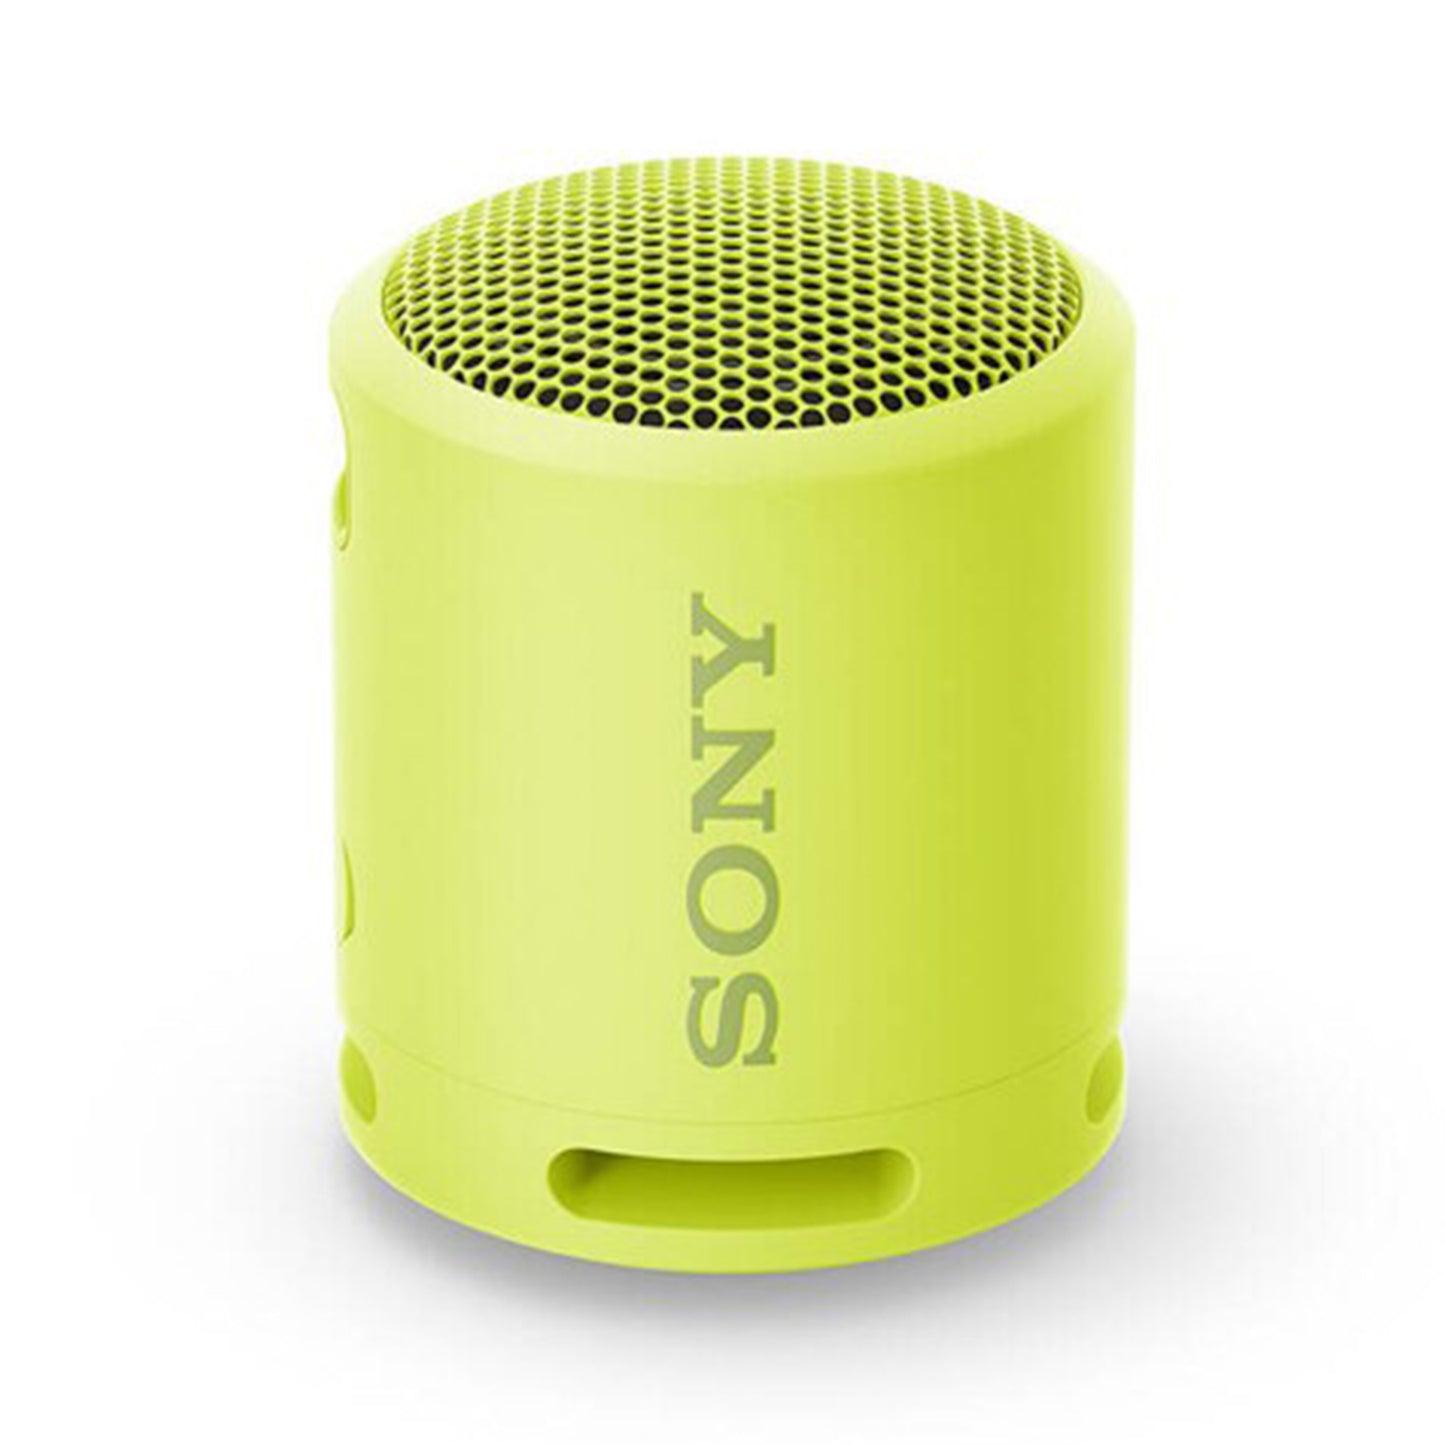 SONY XB13 Extra Bass Portable Bluetooth Speaker - Yellow